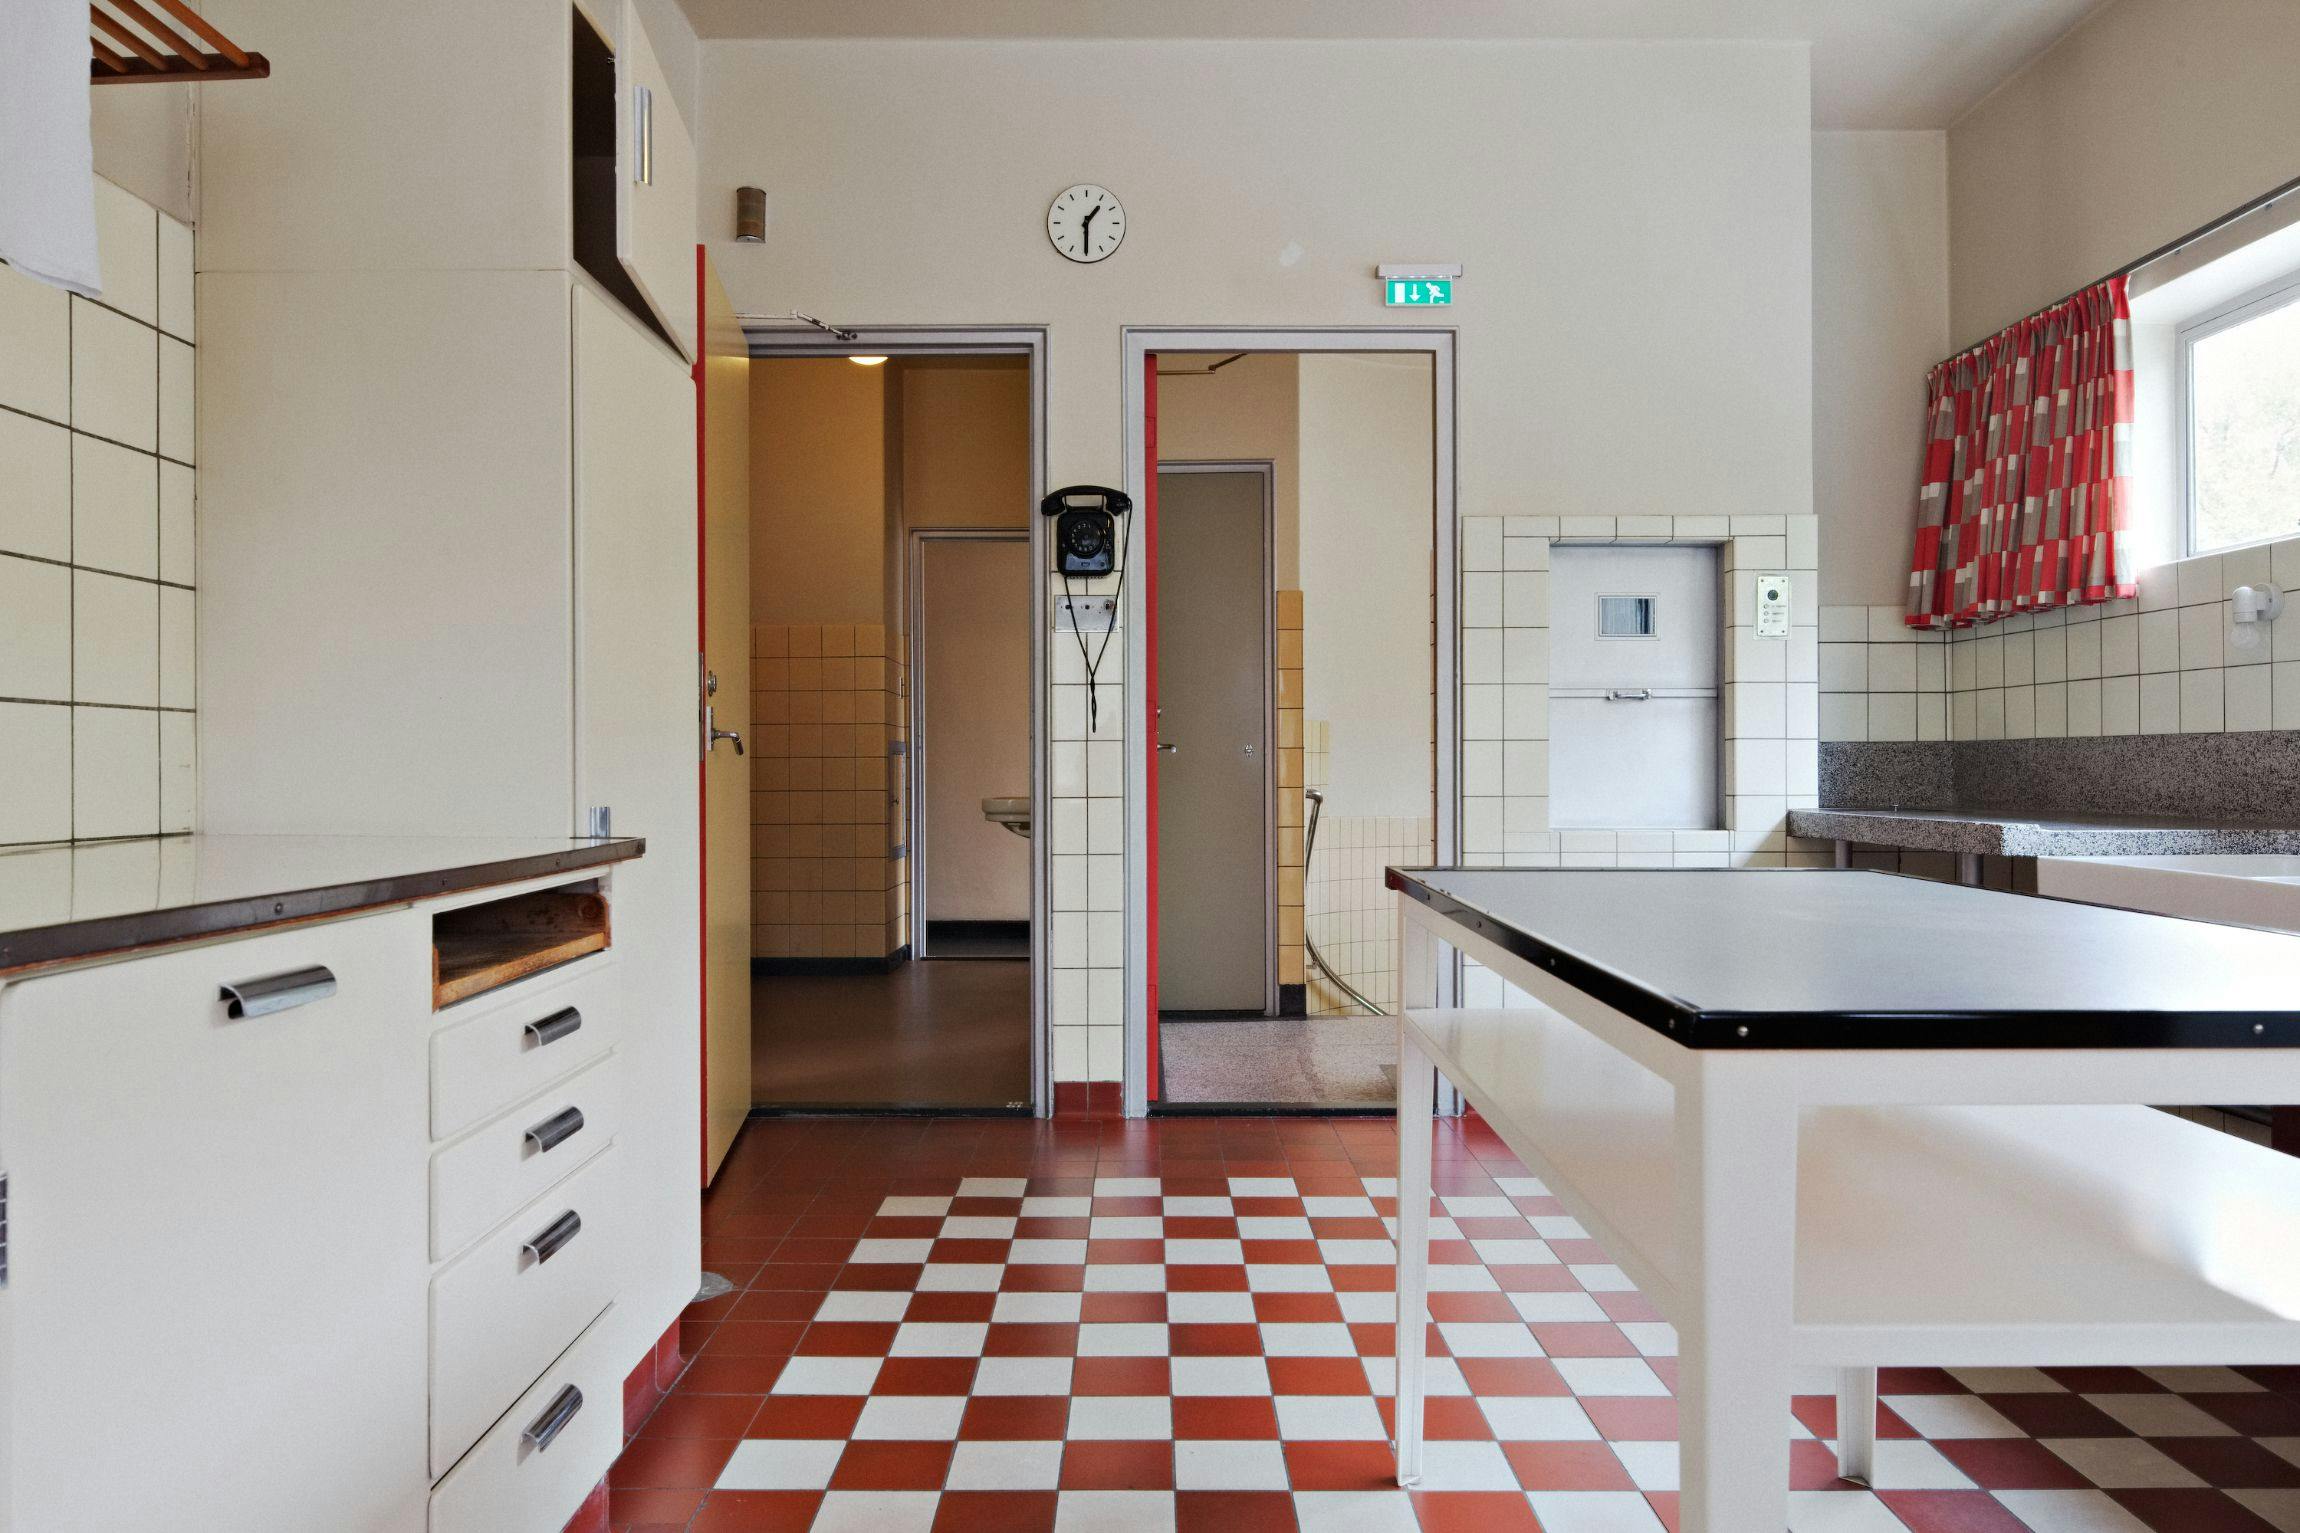 Huis Sonneveld, keuken. Foto Johannes Schwartz 